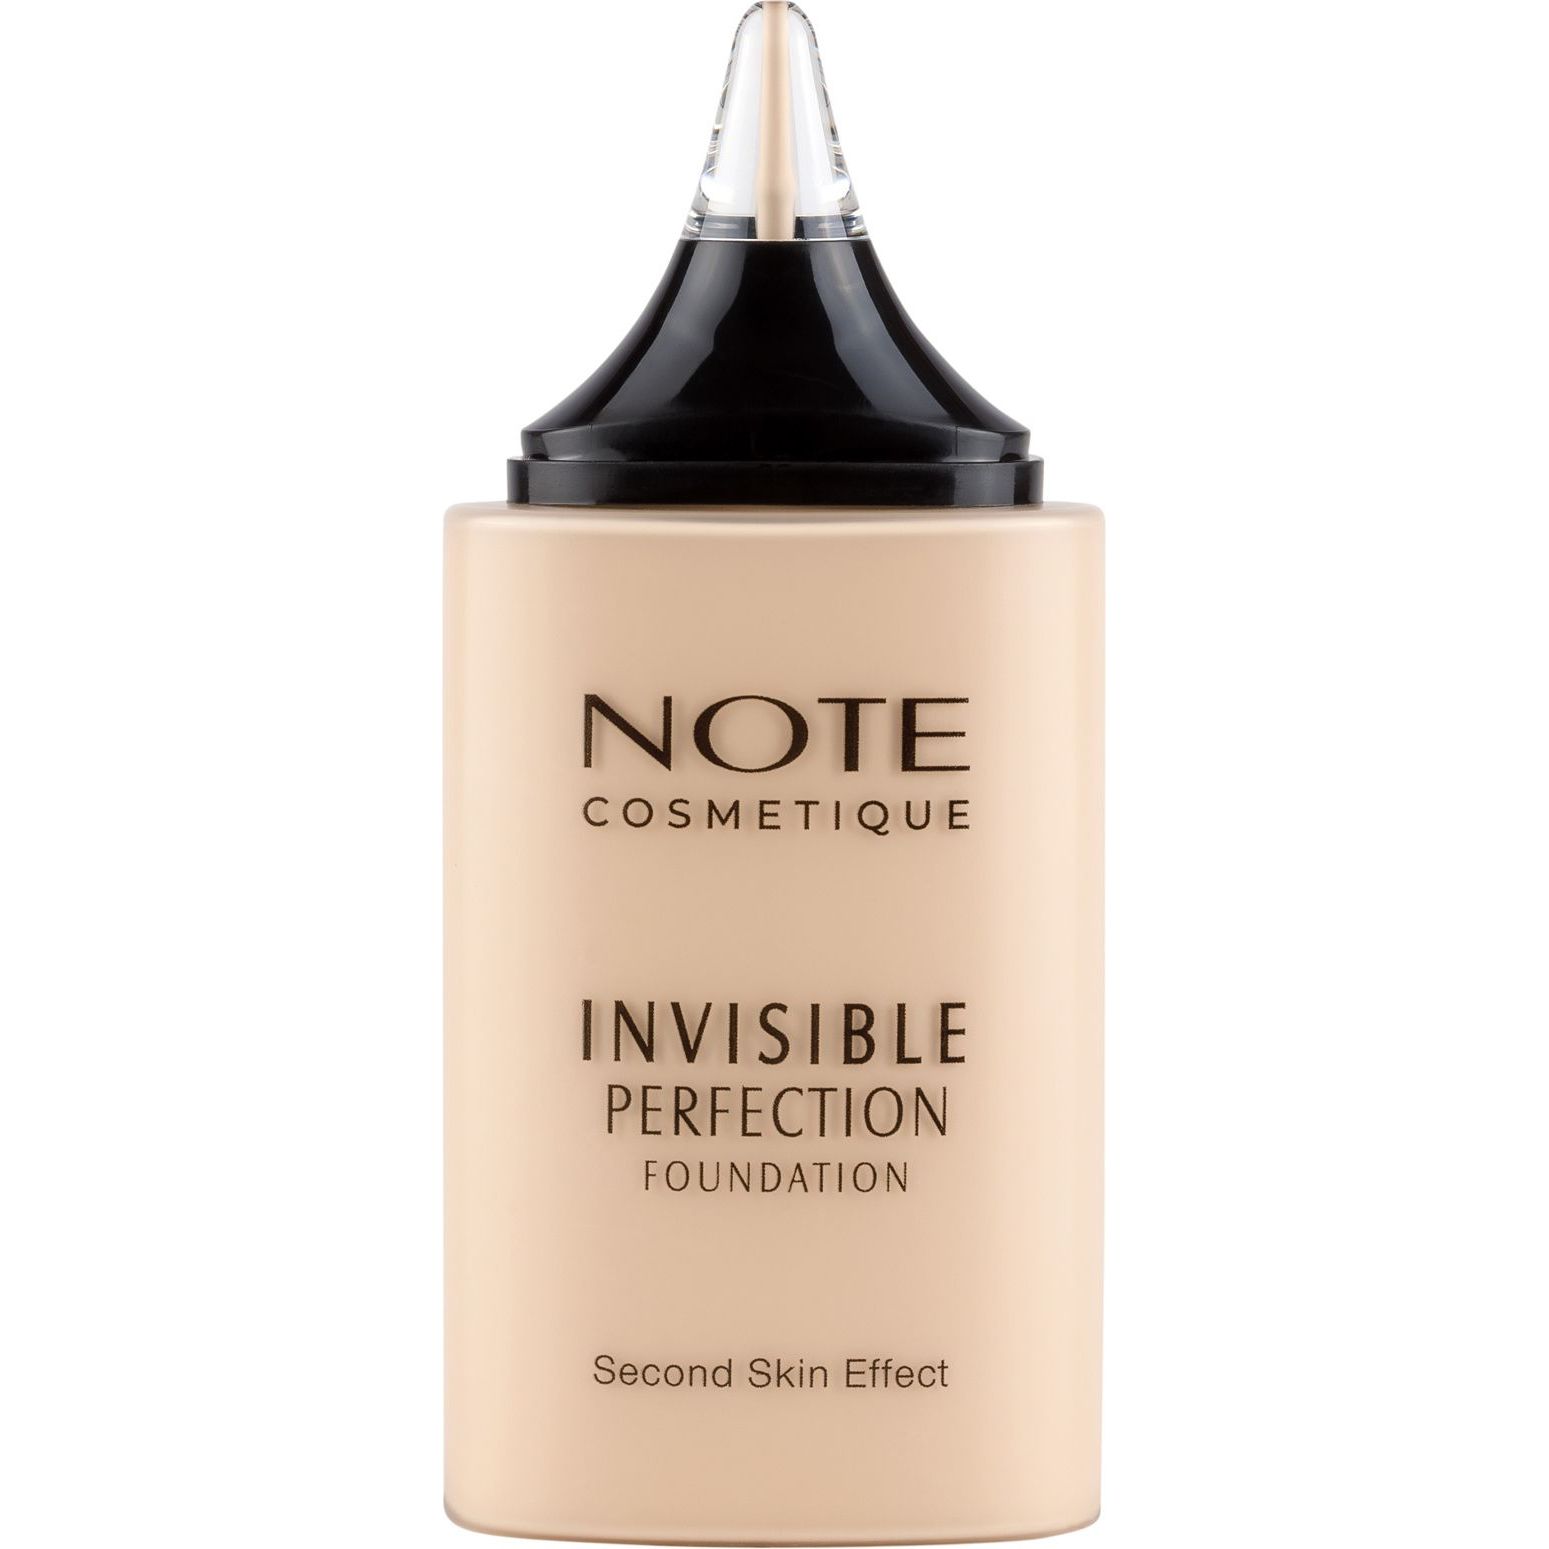 Тональная основа Note Cosmetique Invisible Perfection Foundation тон 110 (Fair Ivory) 35 мл - фото 2